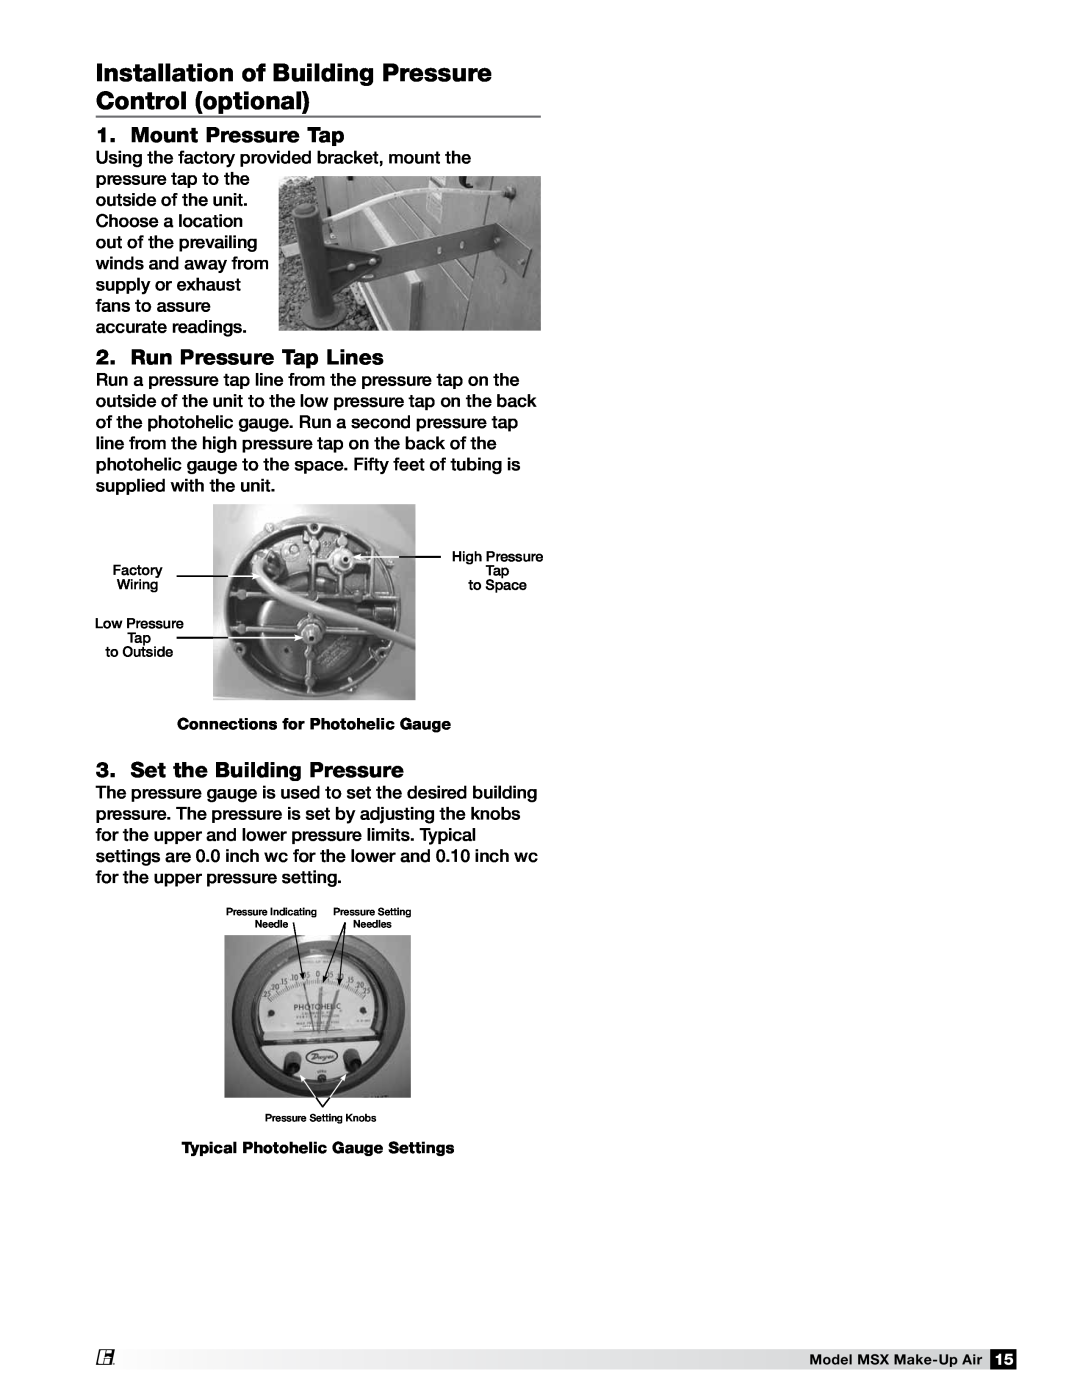 Greenheck Fan 470658 MSX manual Mount Pressure Tap, Run Pressure Tap Lines, Set the Building Pressure 